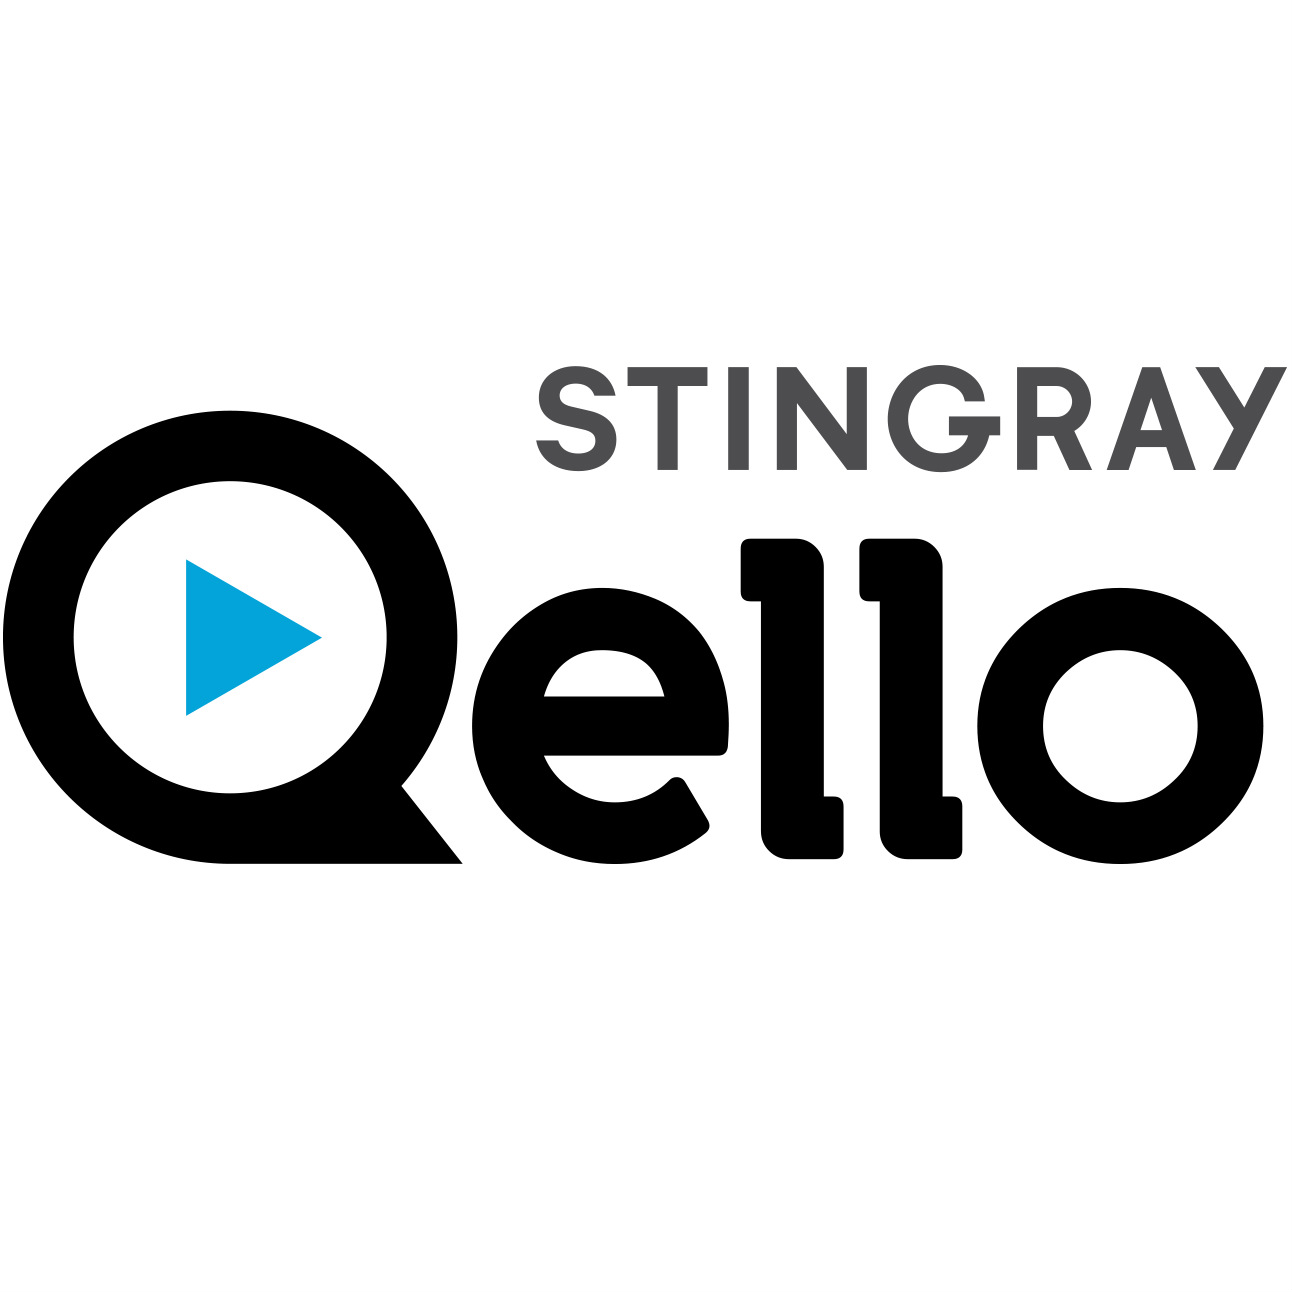 Qello-Stingray-Logo-Black_SQUARE.jpg